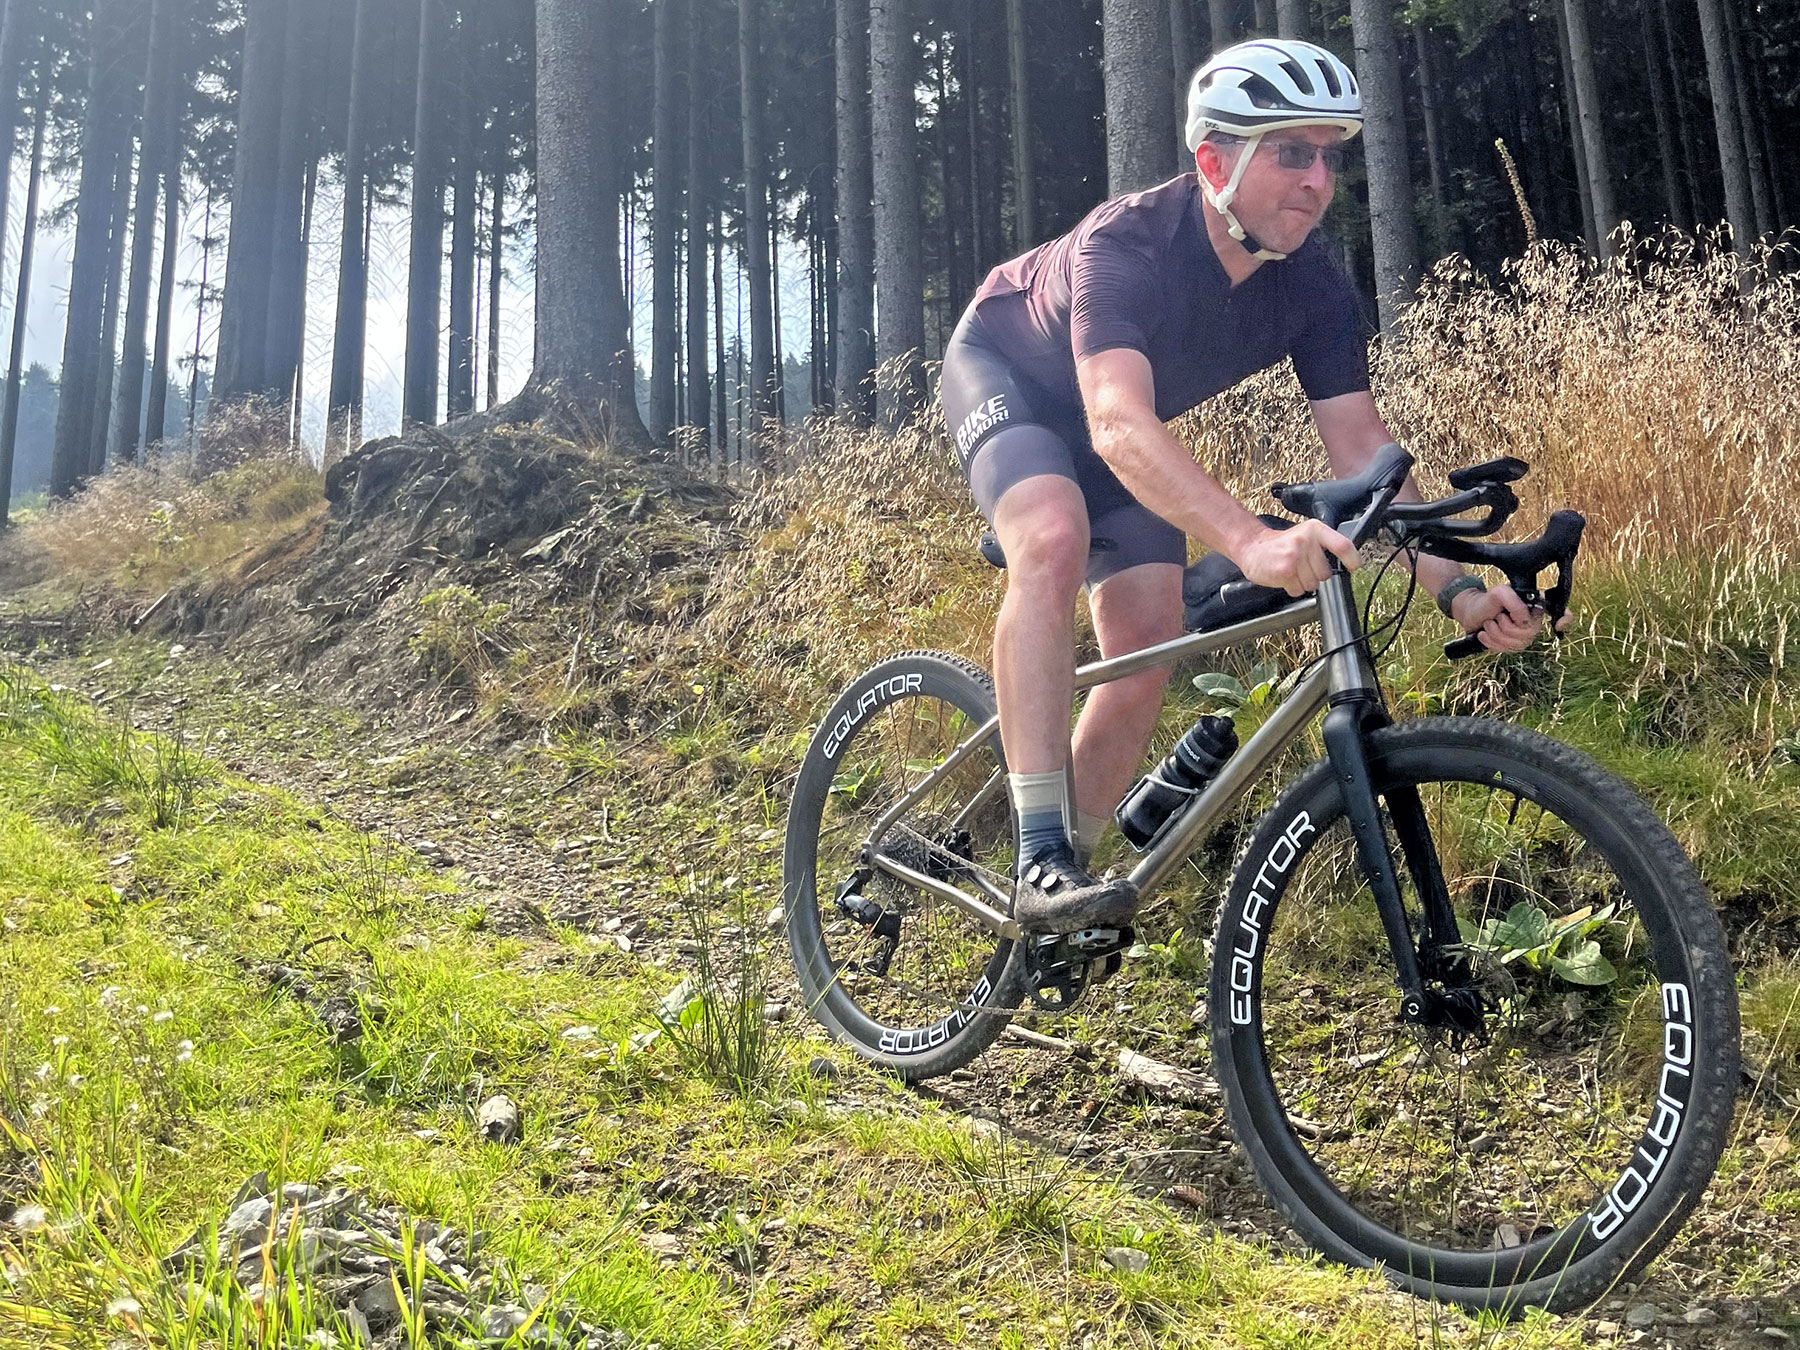 Equator Yasei titanium affordable gravel bike review, riding trails